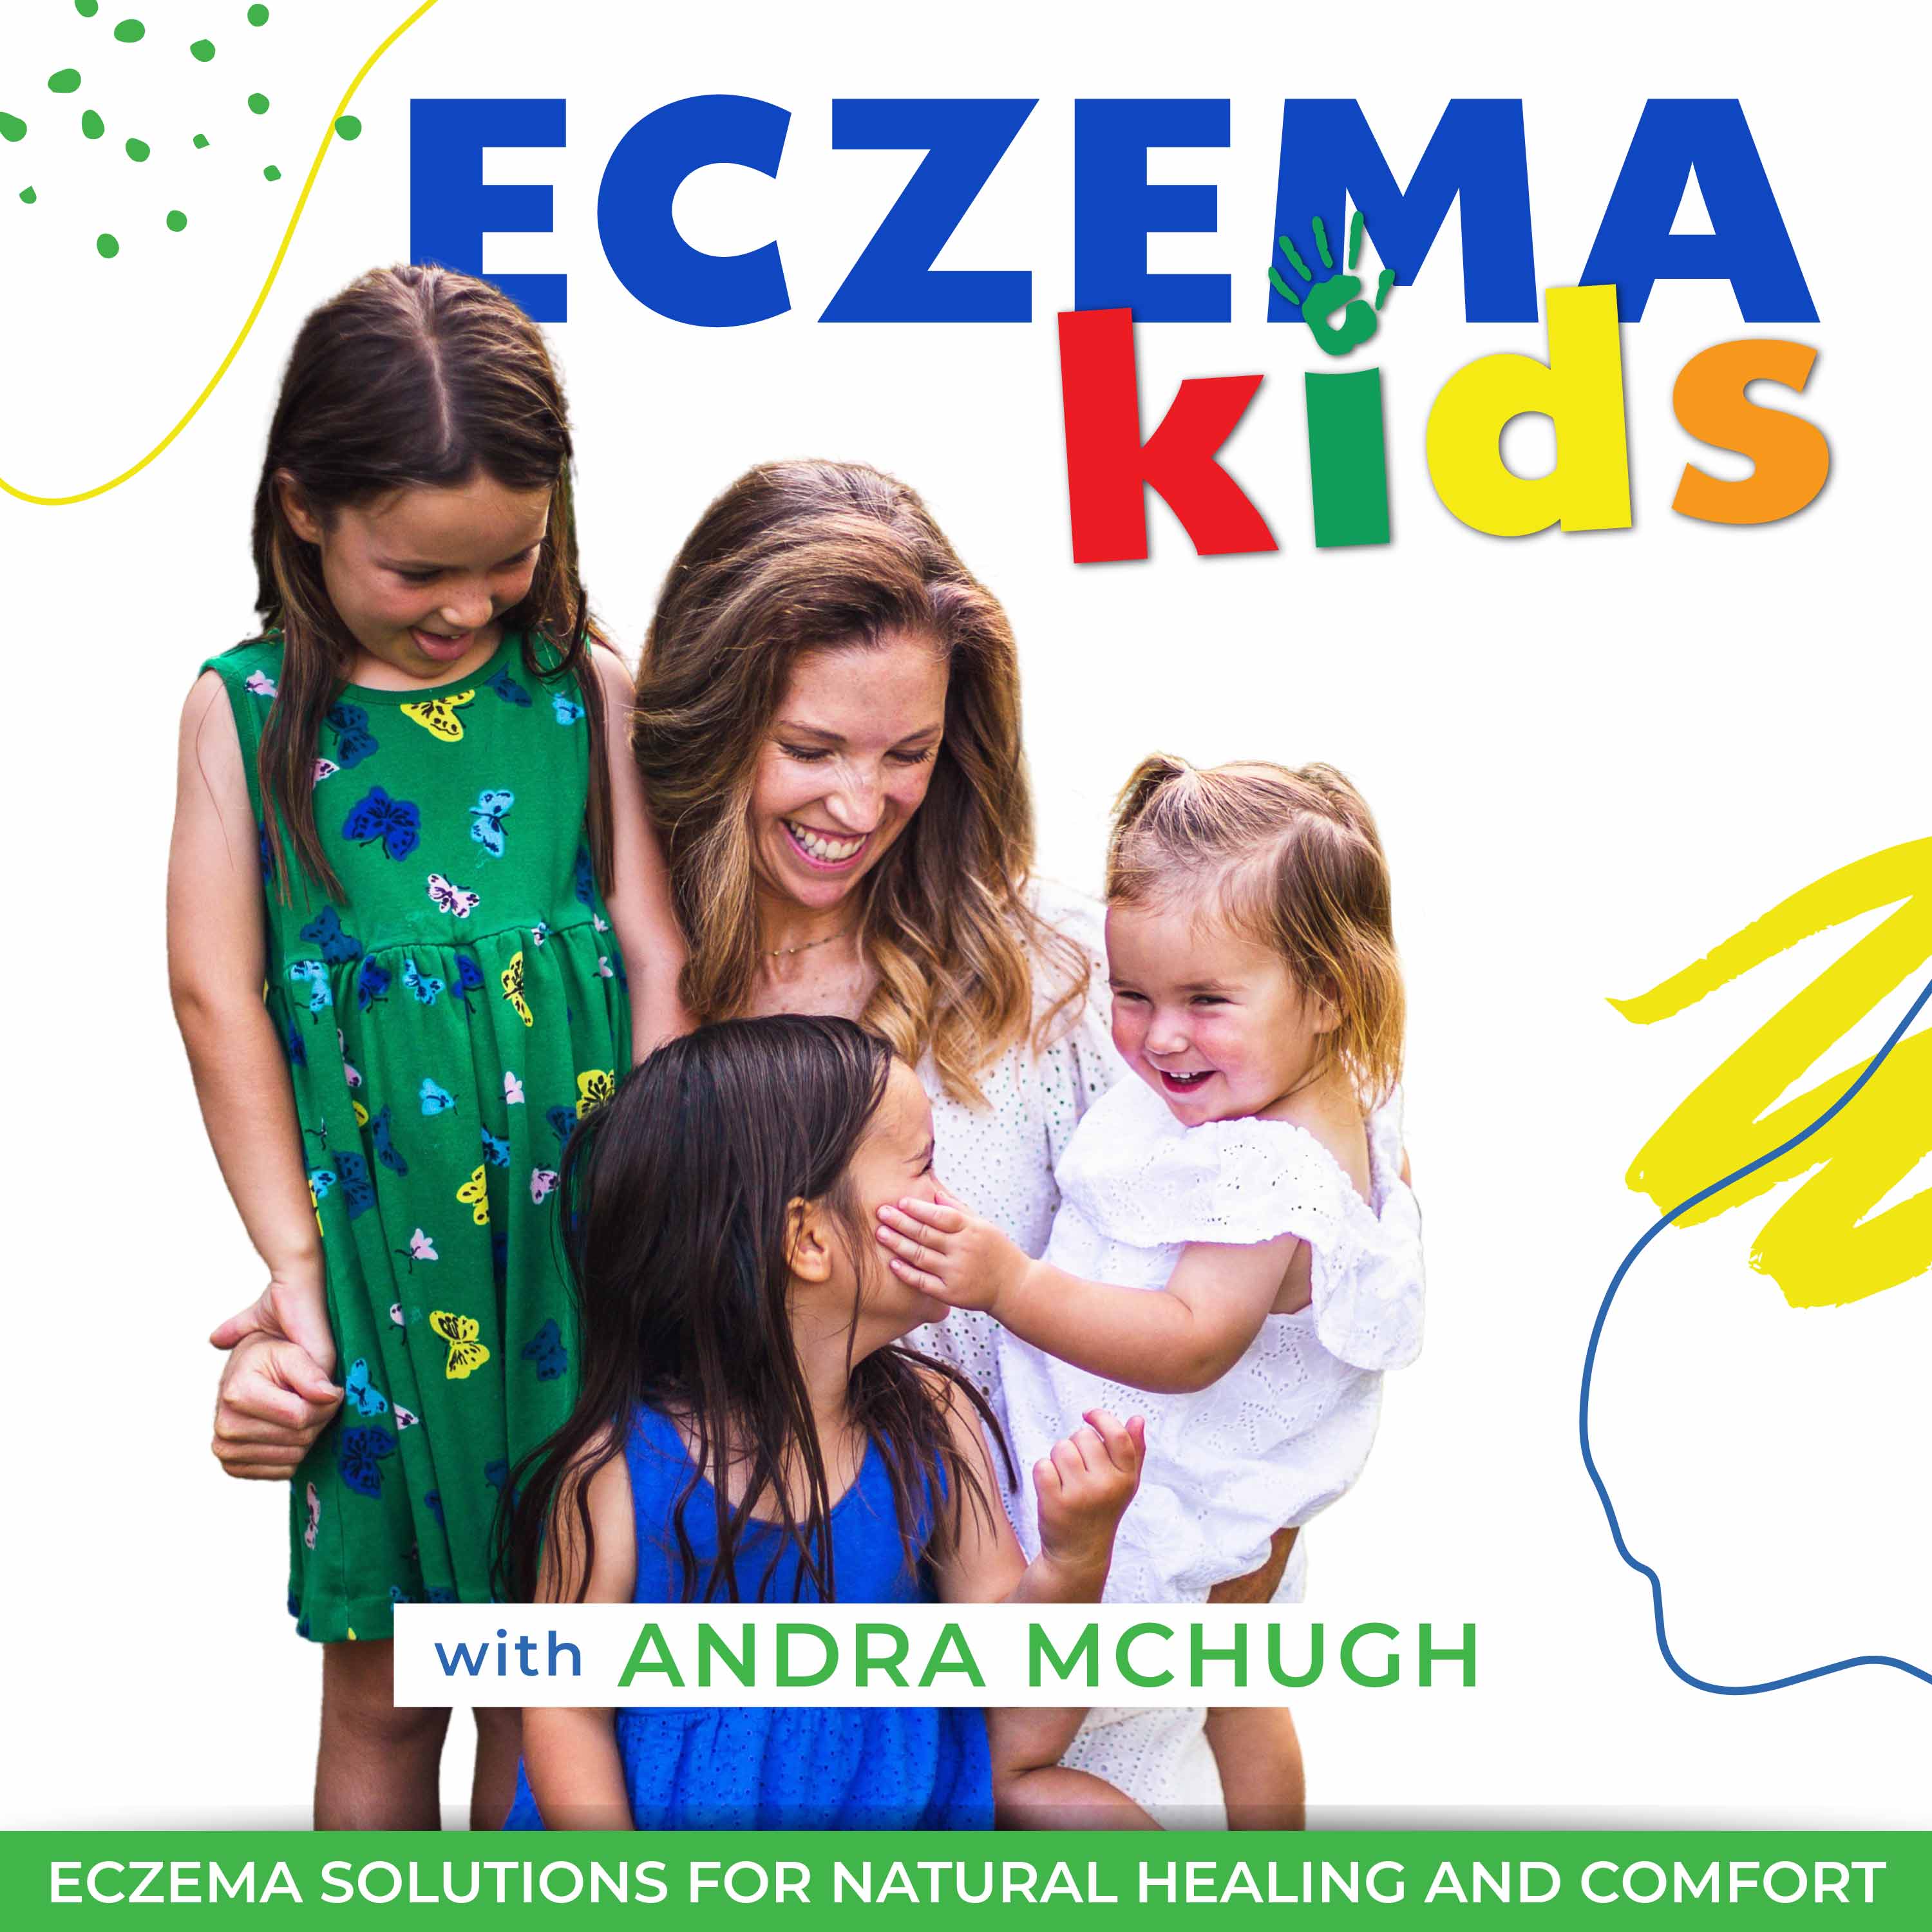 Eczema Kids - Natural Eczema Solutions, Eczema Diet, Eczema Causes, Eczema Creams, Eczema Symptoms, Eczema Itching, Atopic Dermatitis, Eczema Flare-Ups, Best Eczema Products, Eczema Support